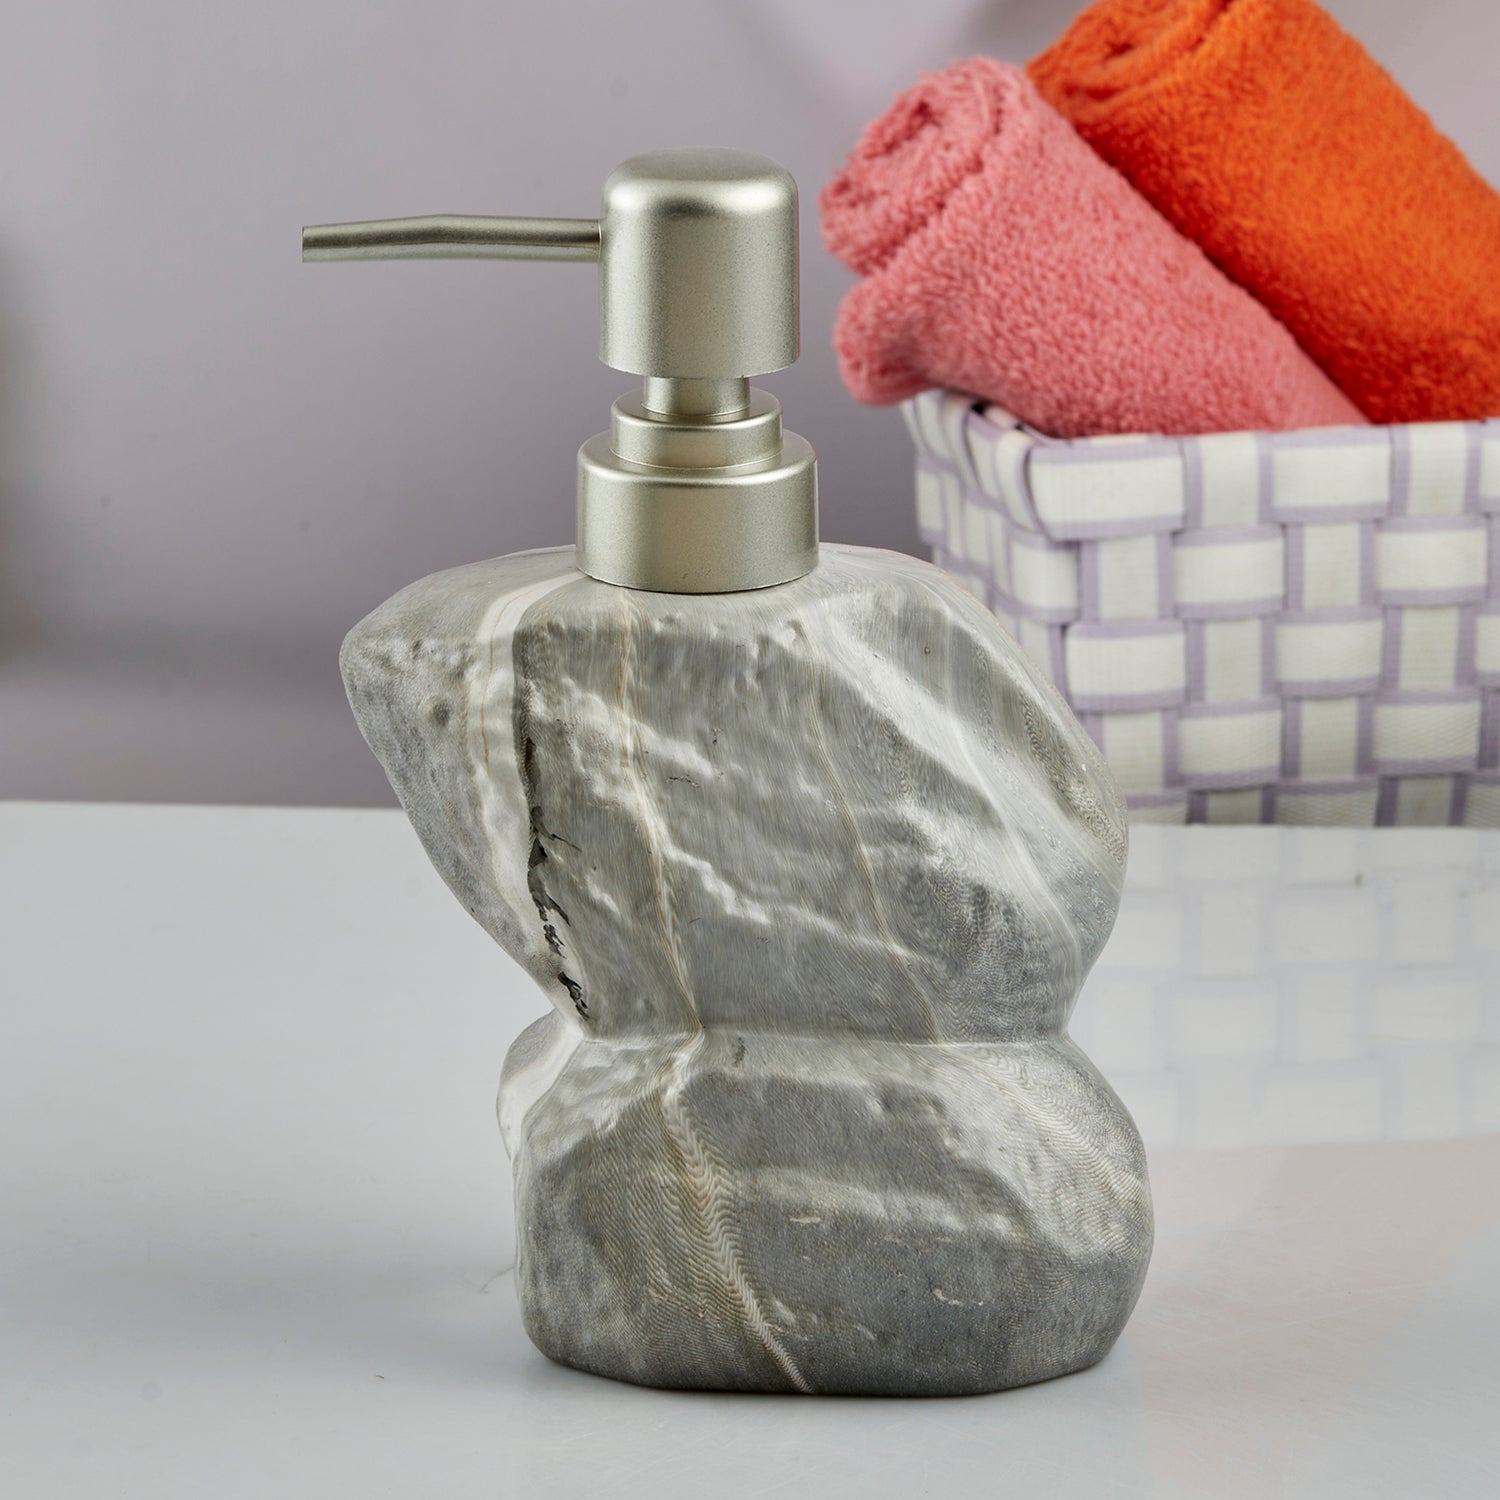 Ceramic Soap Dispenser Pump for Bathroom for Bath Gel, Lotion, Shampoo (7617)